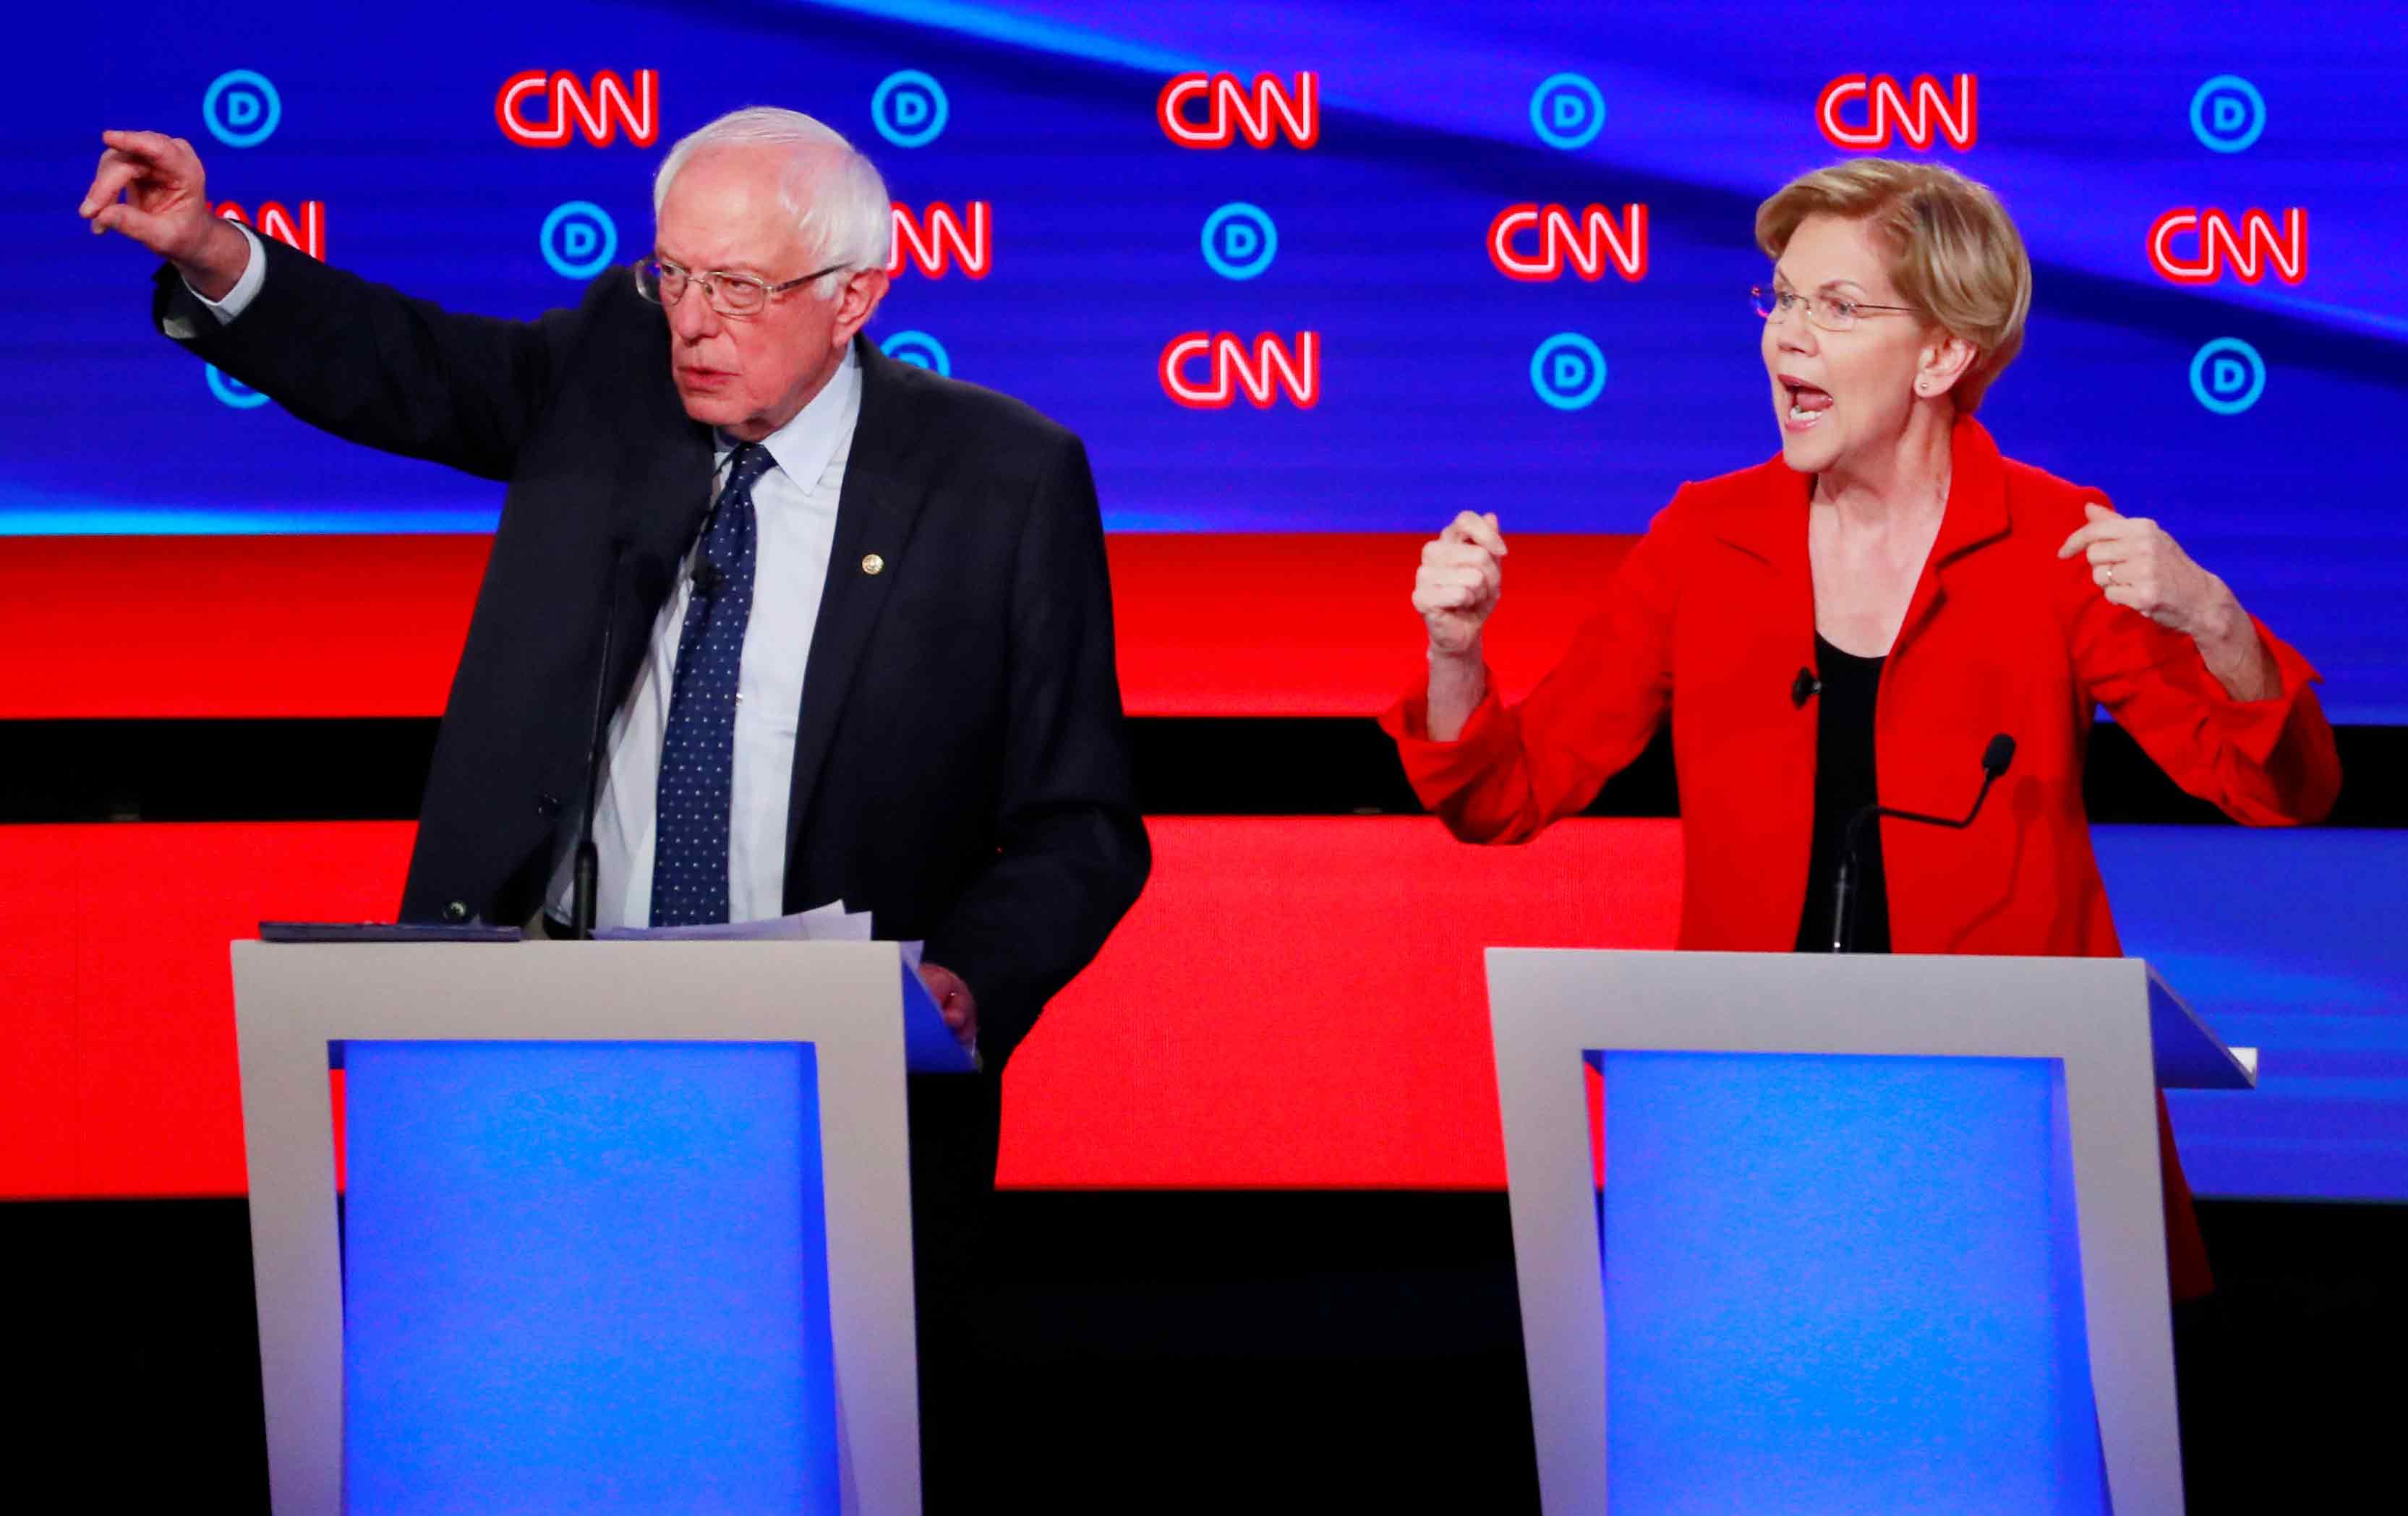 Senators Elizabeth Warren and Bernie Sanders